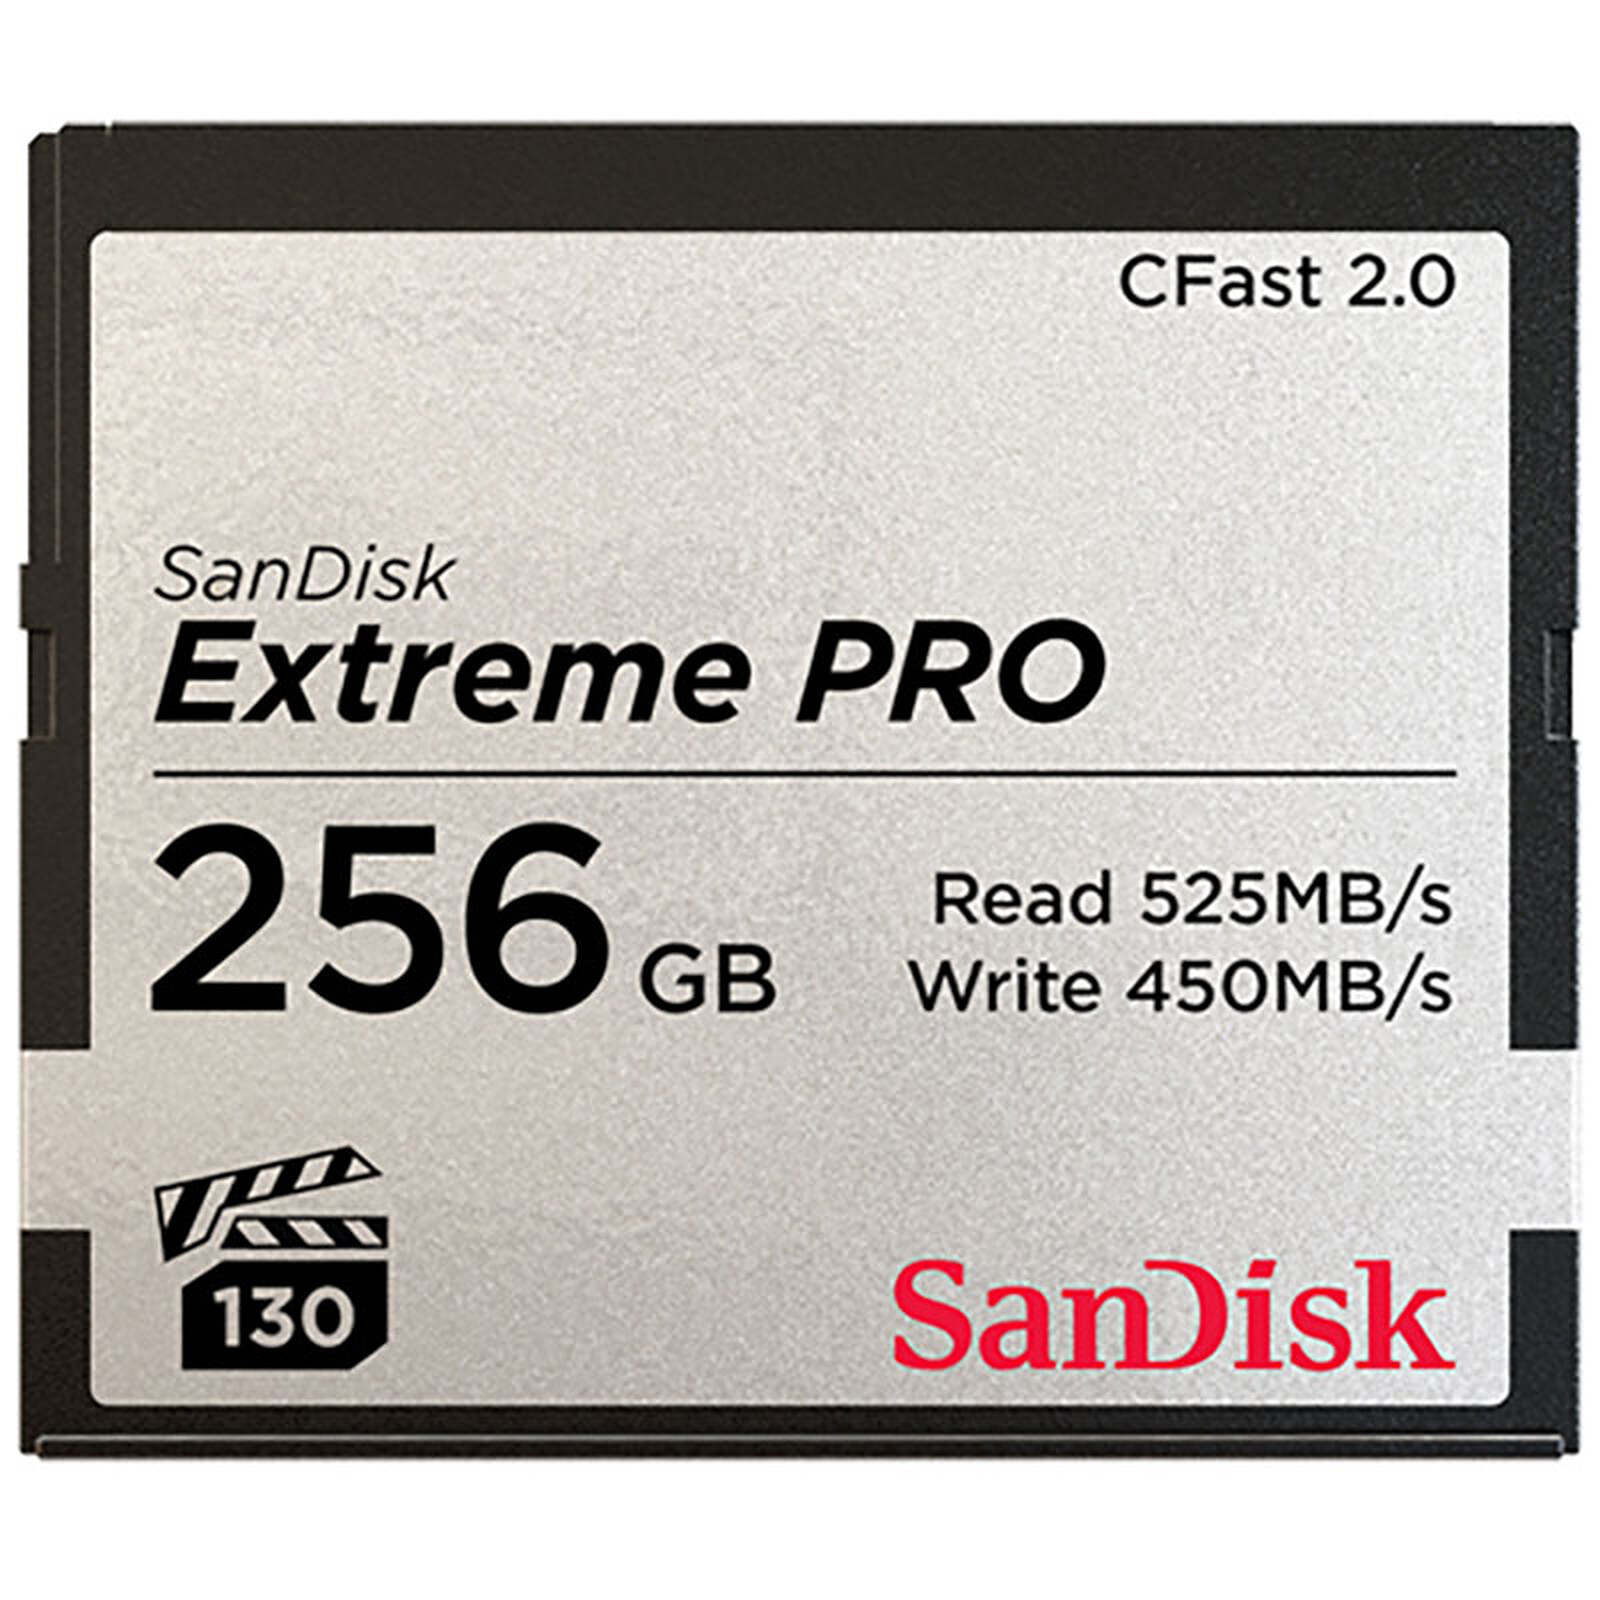 SanDisk Extreme Pro SDHC UHS-I 32 Go (SDSDXXO-032G-GN4IN) - Carte mémoire -  LDLC